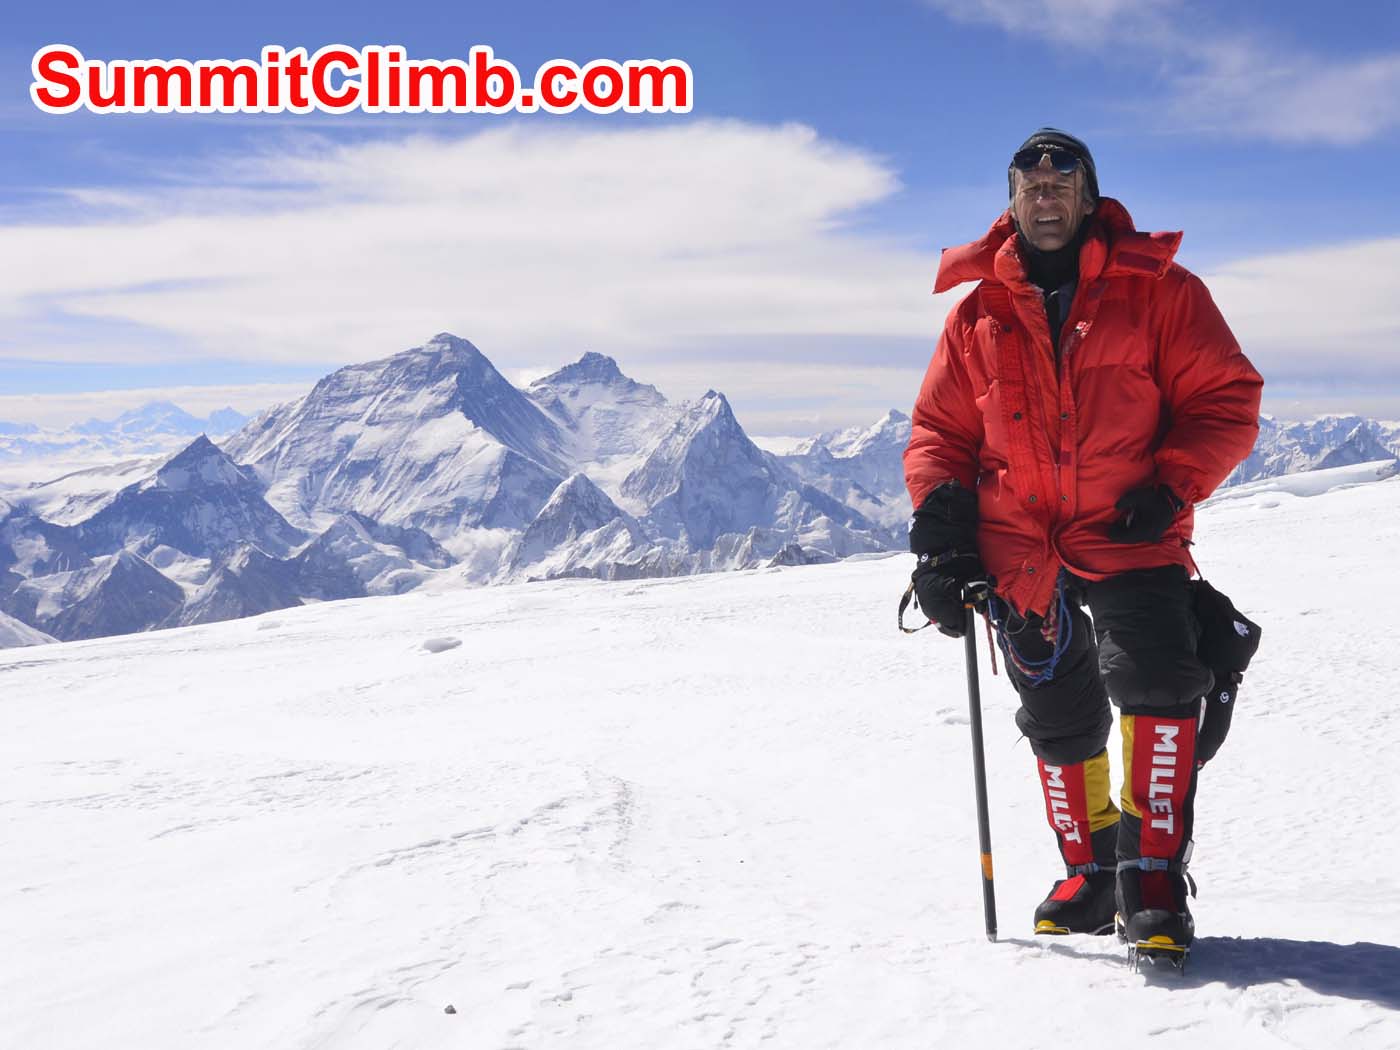 Dmitri on the summit 24 May. Pemba Sherpa Photo